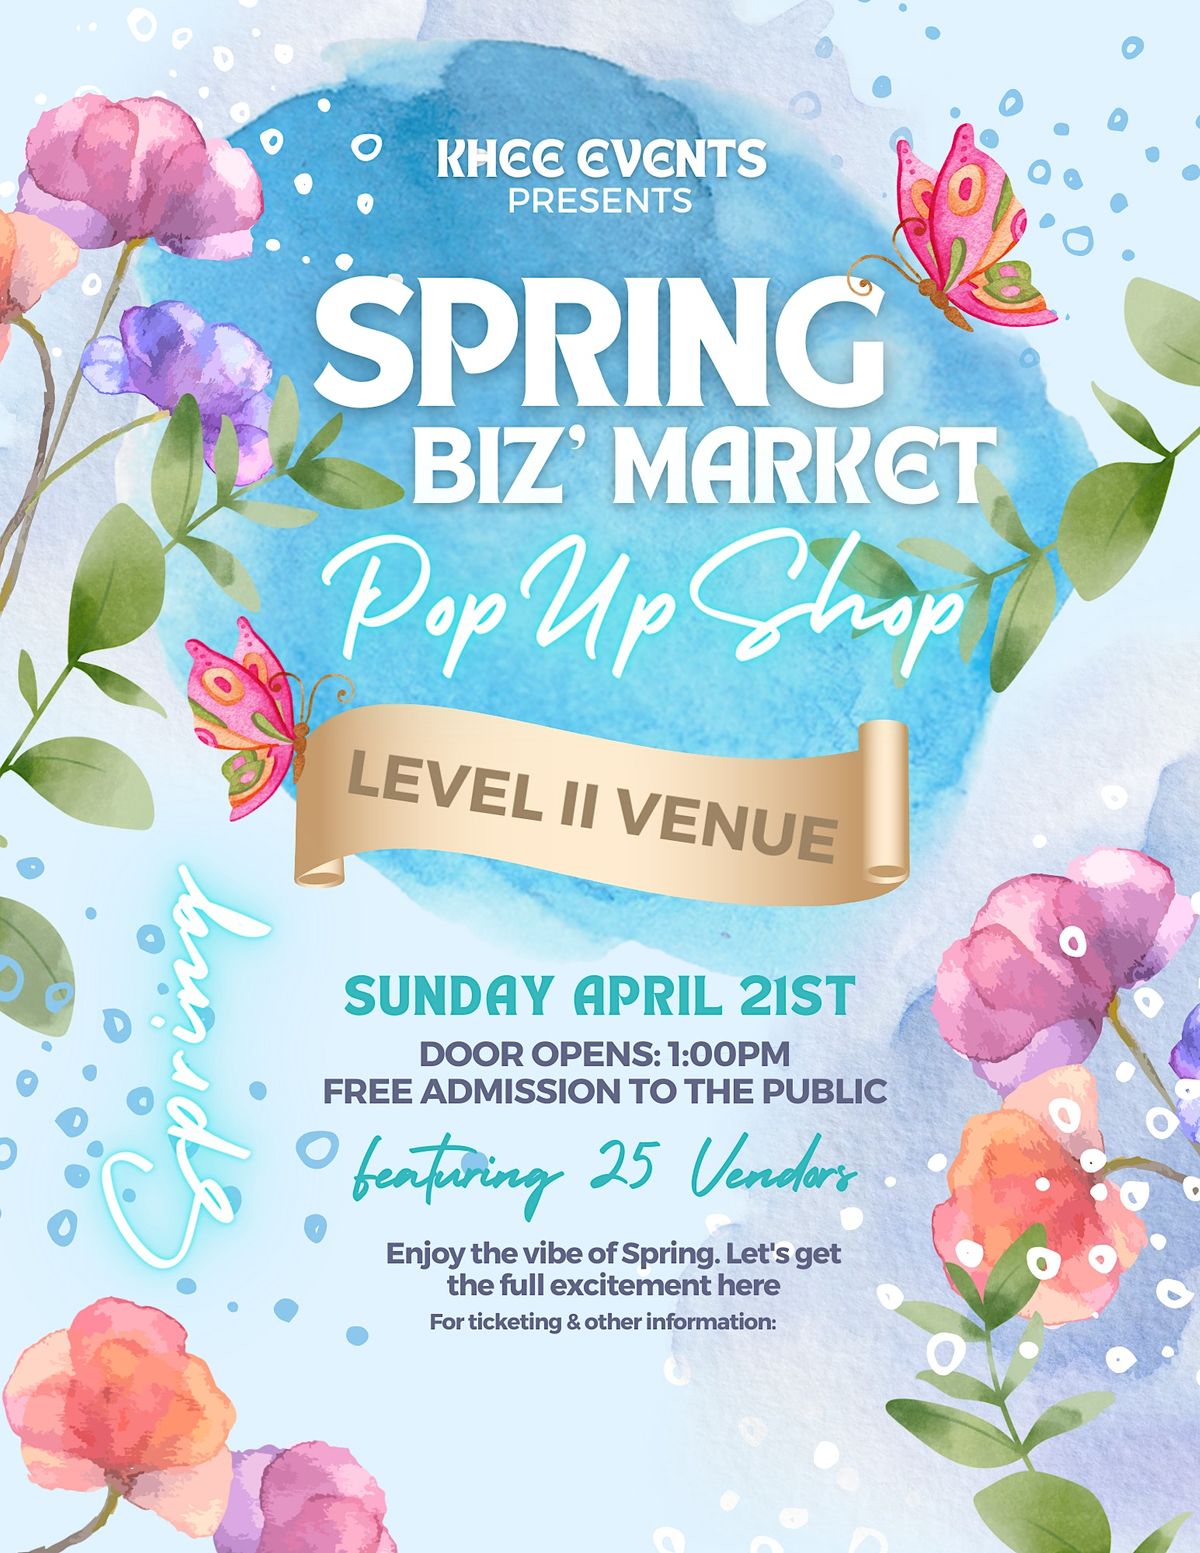 Spring Small Biz Market Pop Up Shop